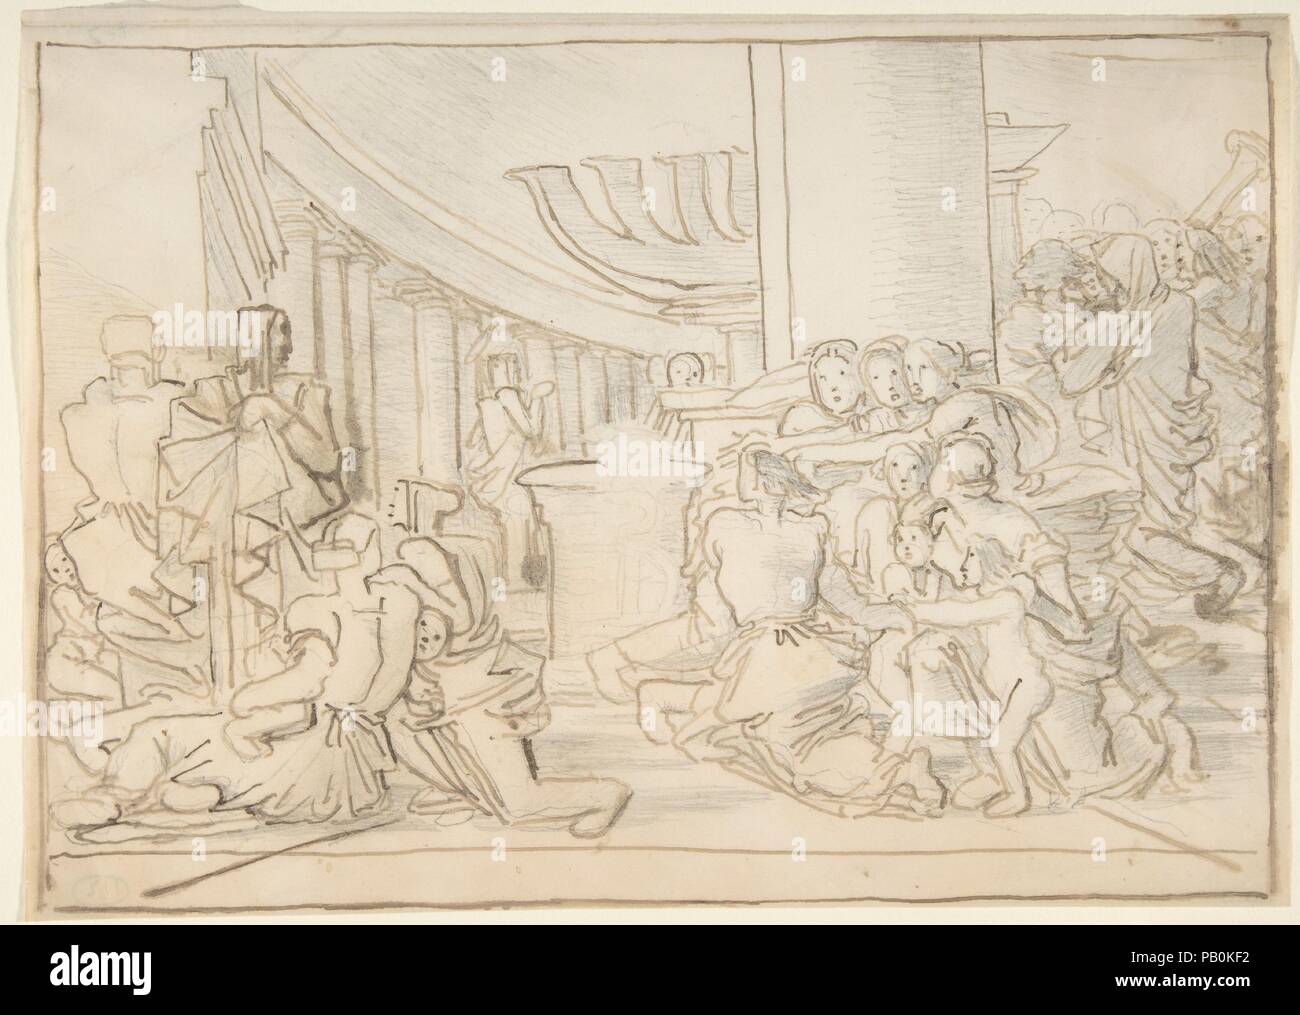 Congregation in a Temple. Artist: Fortunato Duranti (Italian, 1787-1863). Dimensions: 7 1/2 x 10 9/16in. (19.1 x 26.8cm). Date: 1787-1863. Museum: Metropolitan Museum of Art, New York, USA. Stock Photo